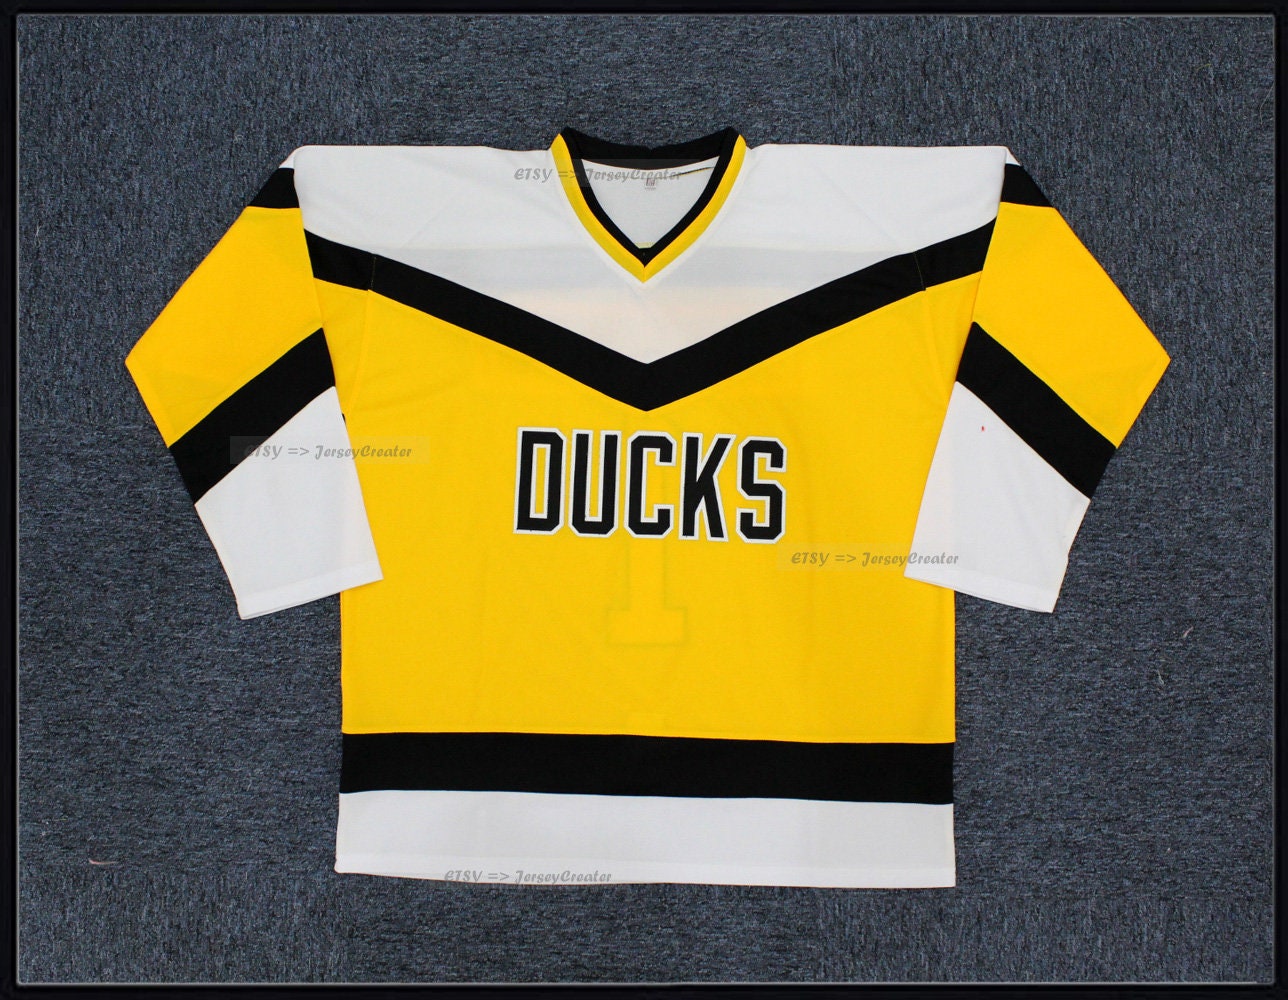 The Mighty Ducks Movie Goldberg Custom Hockey Jersey black -  Israel